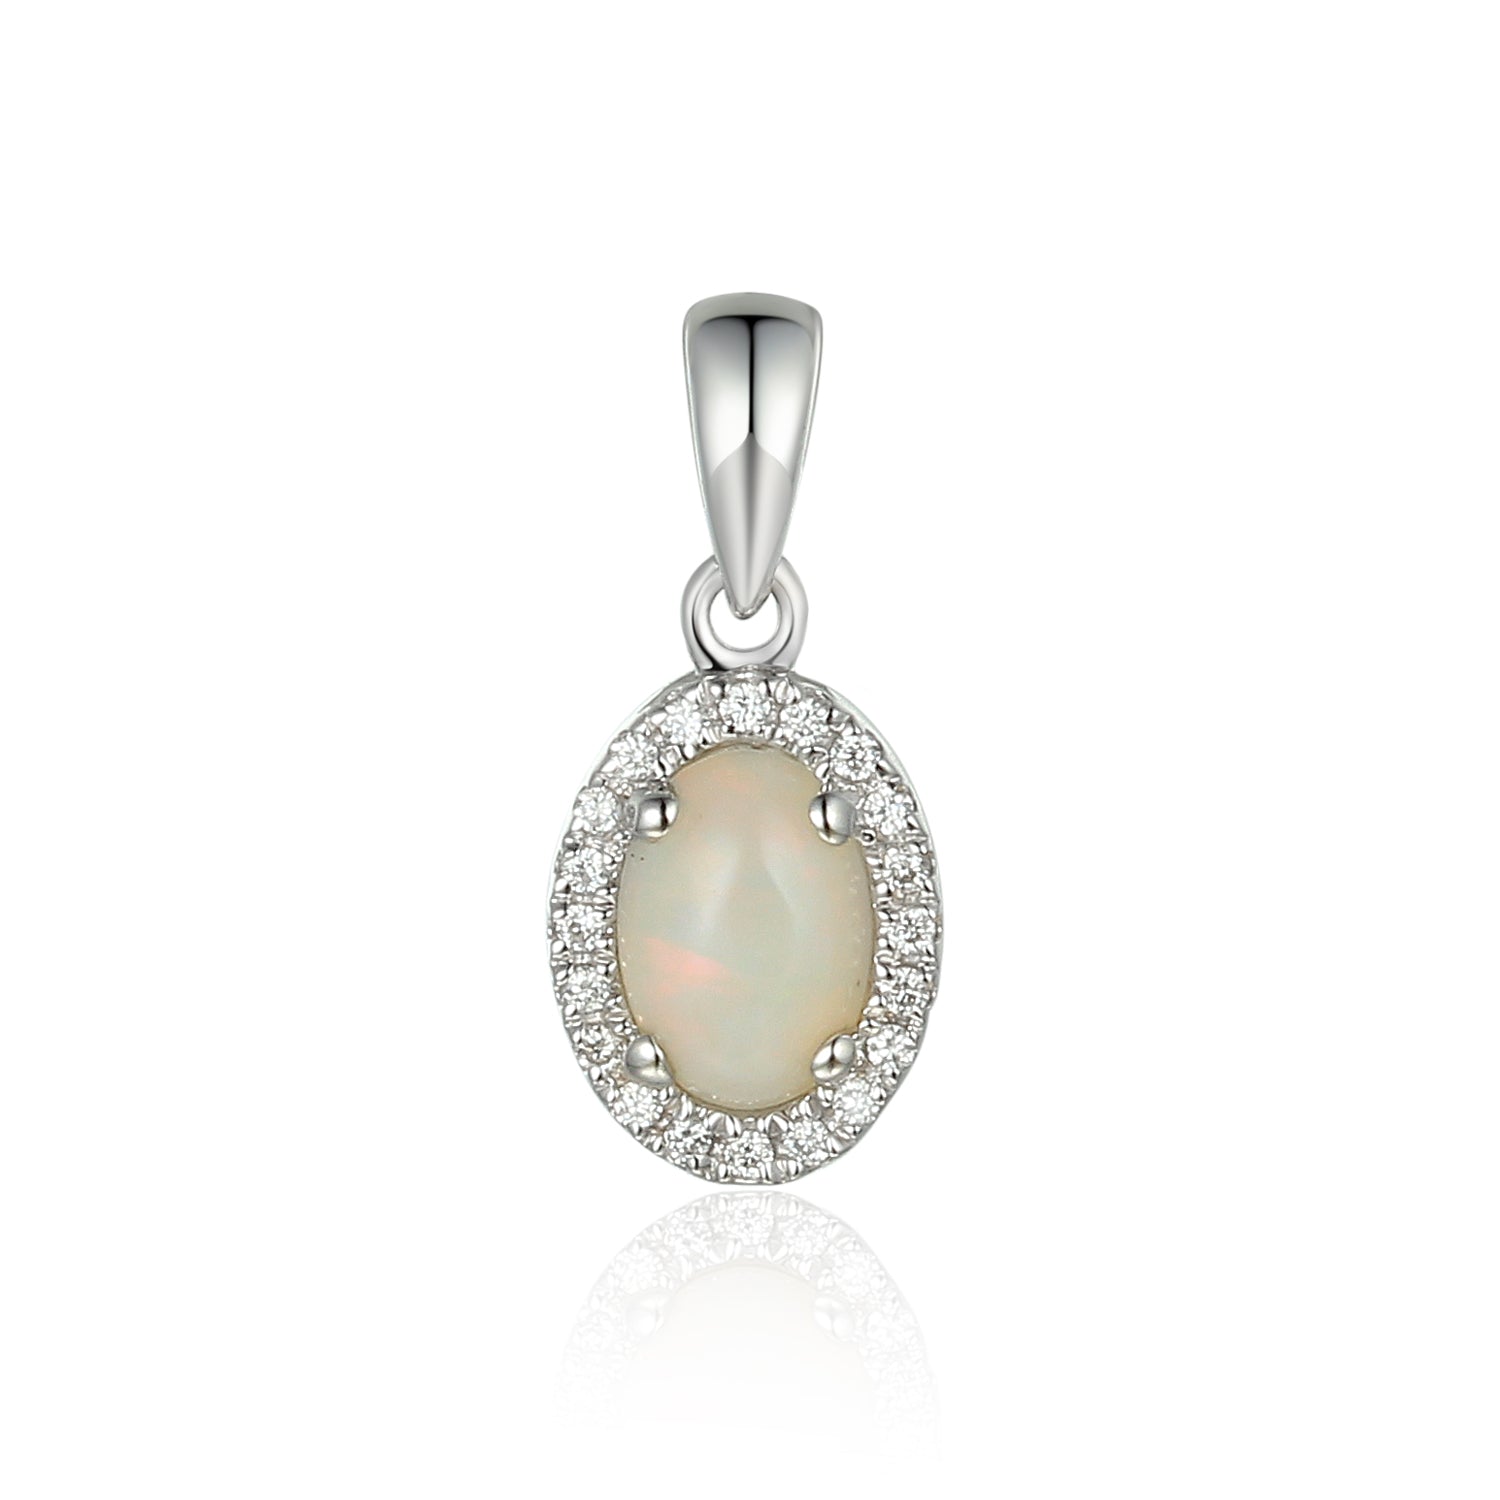 Oval Opal Pendant with a diamond surround